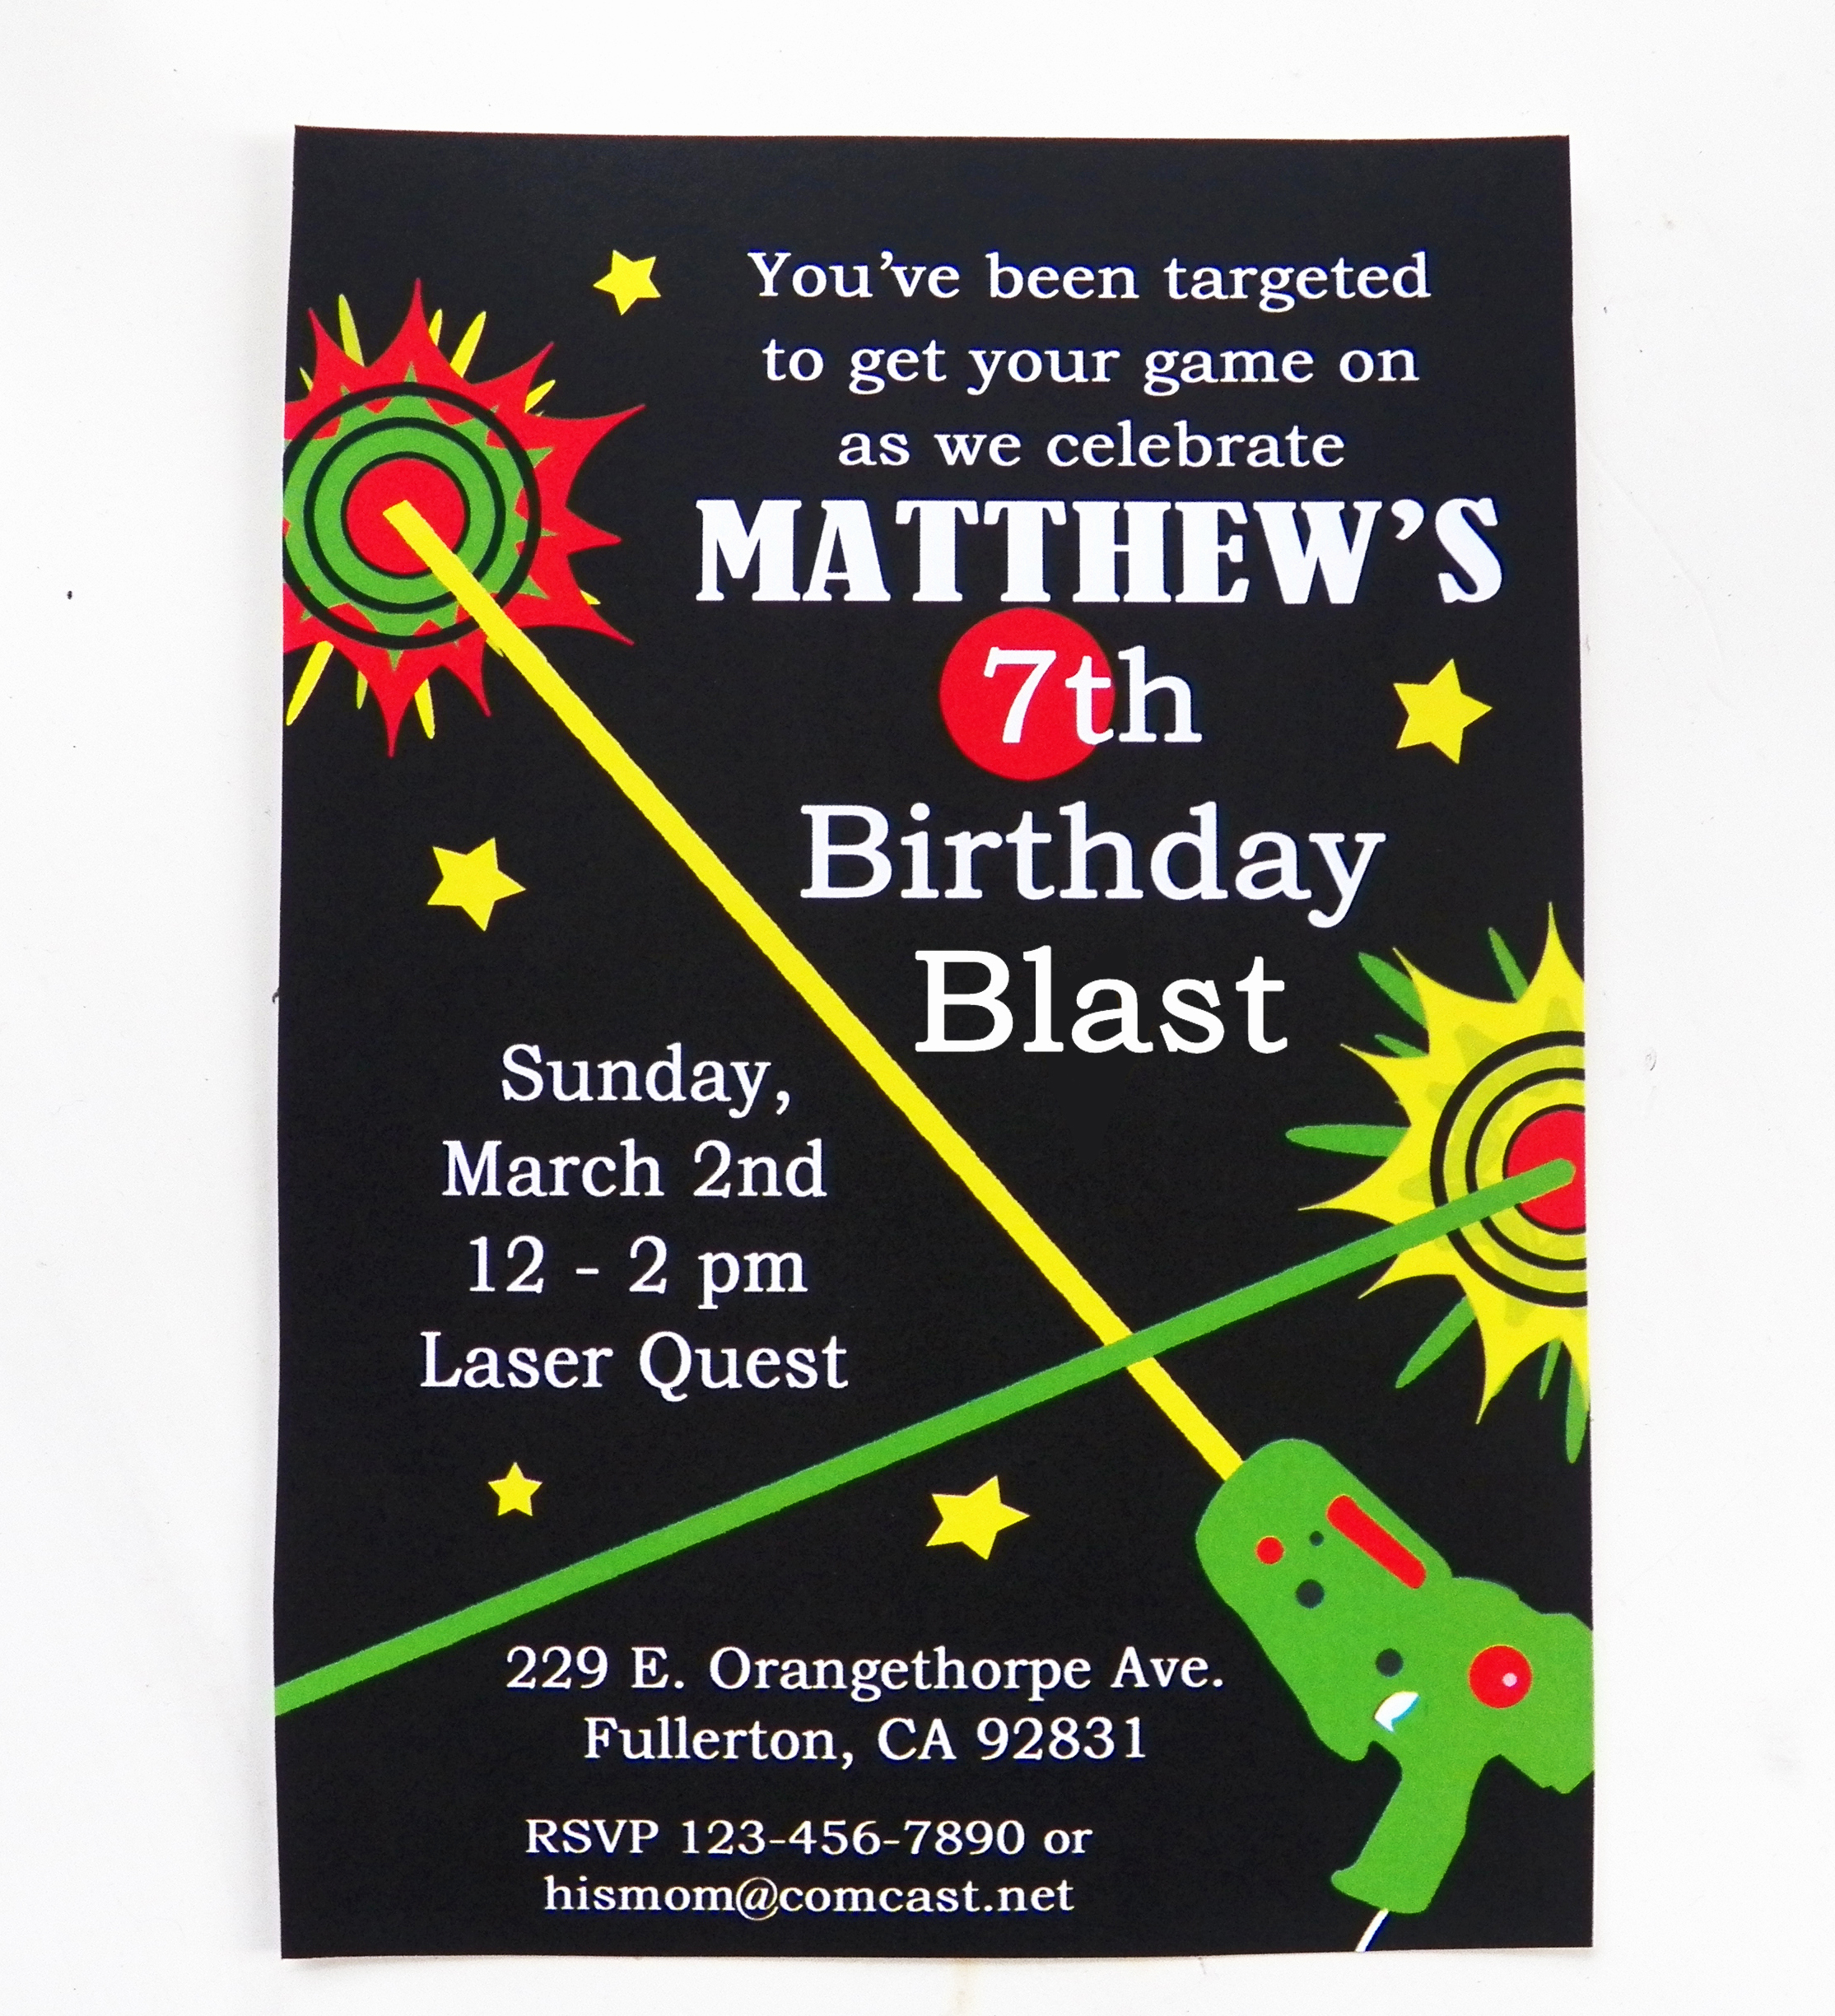 Laser Tag Invitation Wording Elegant Laser Tag Birthday Blast Party that Party Chick